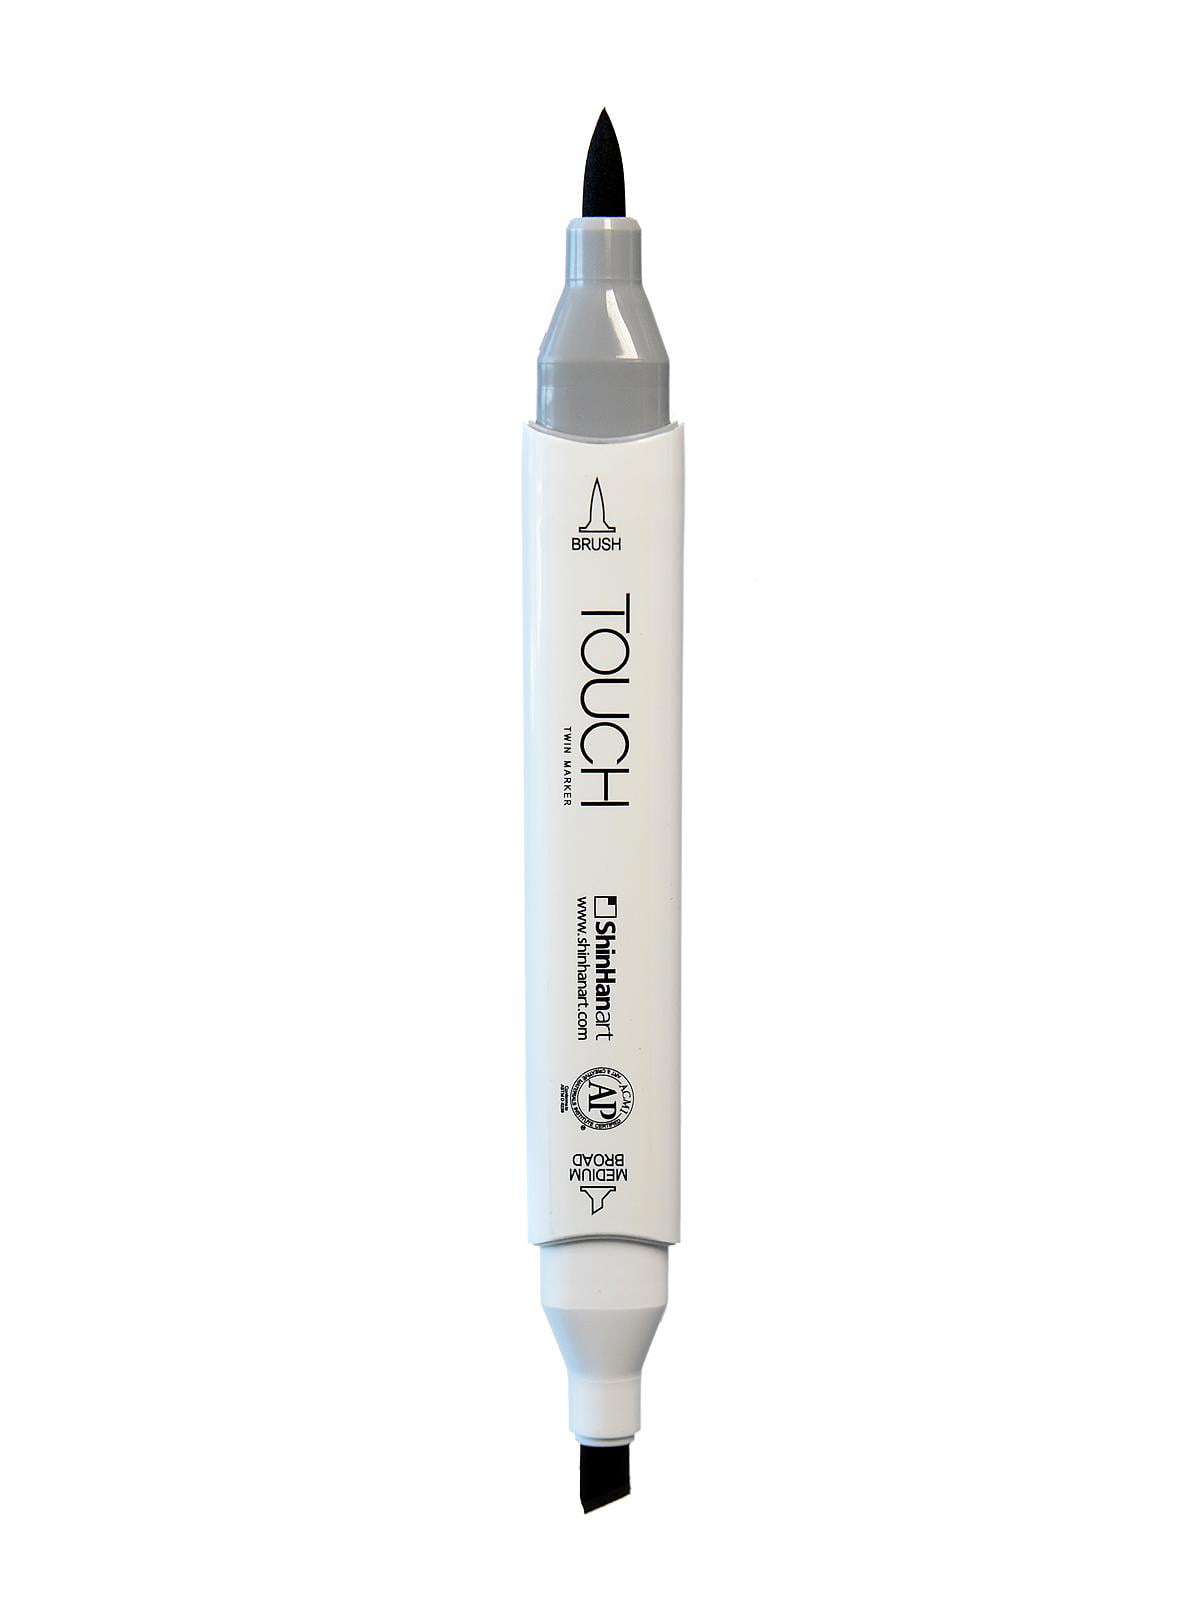 Nil Tech Dual Tip Markers Set - 36 Pcs Art supply, Calligraphy Pen